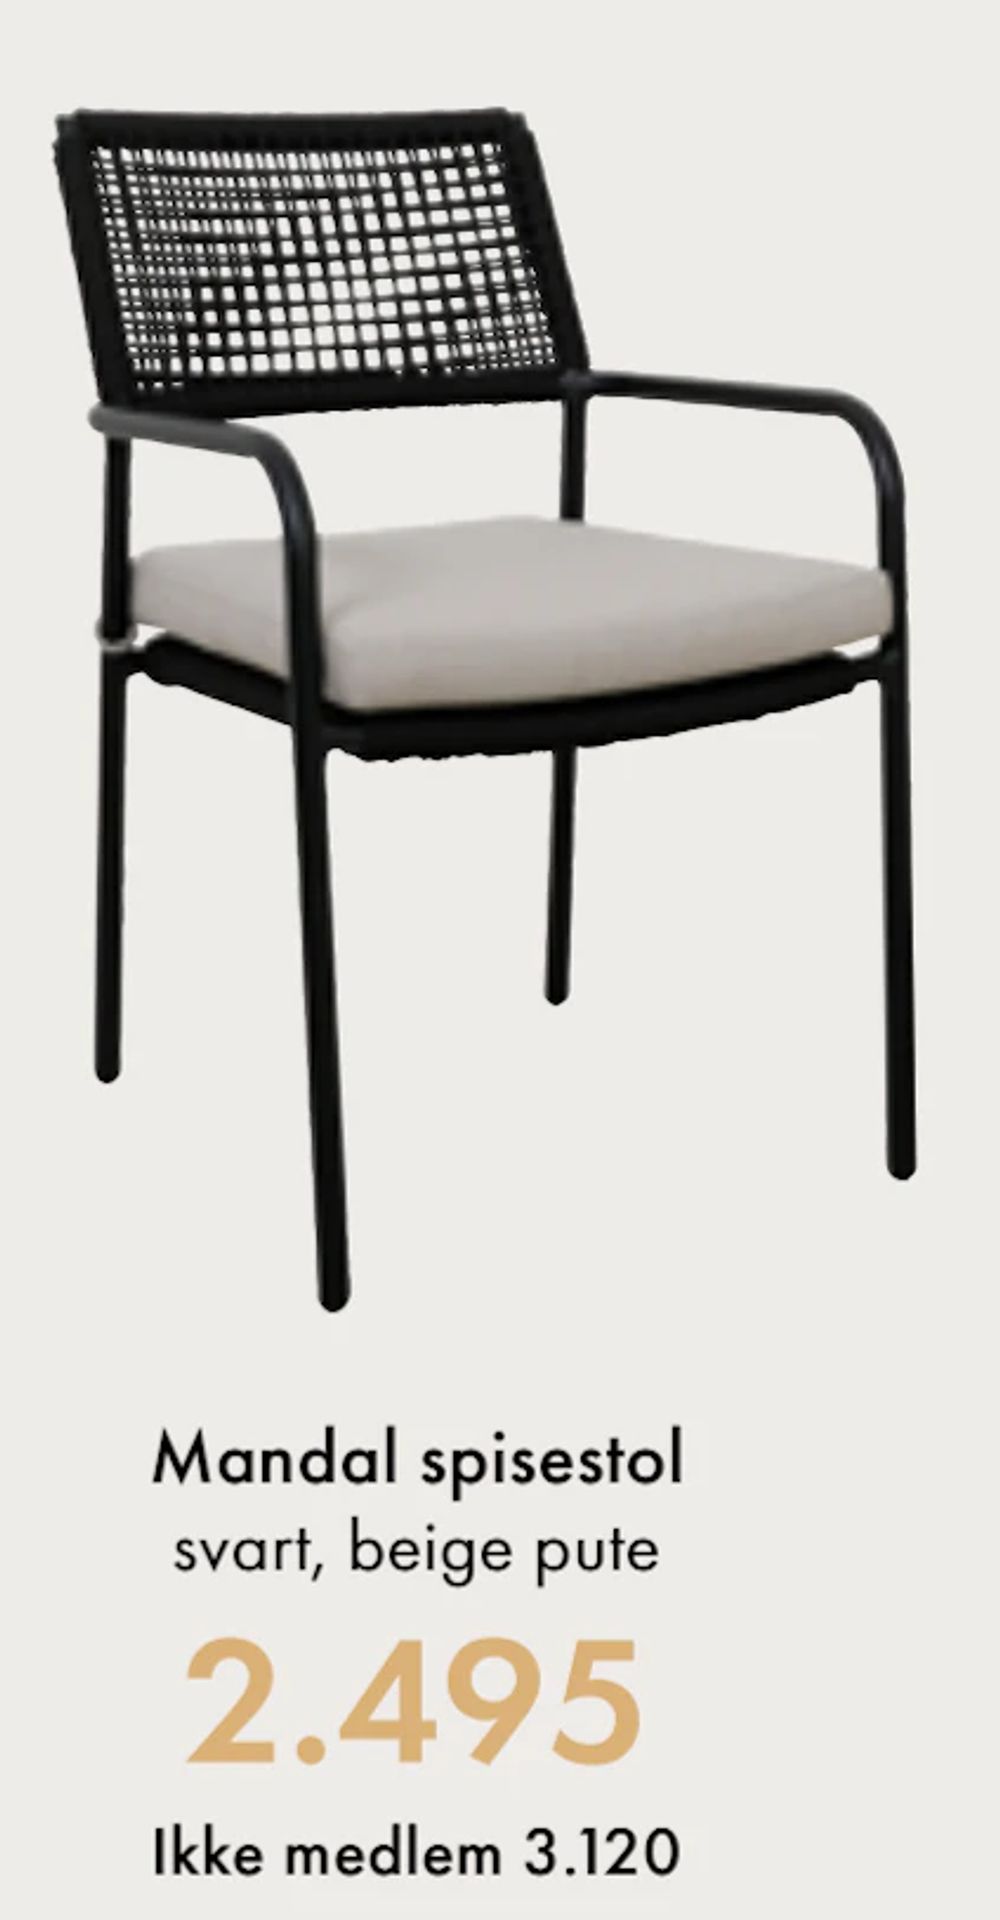 Tilbud på Mandal spisestol svart, beige pute fra Fagmøbler til 3 120 kr